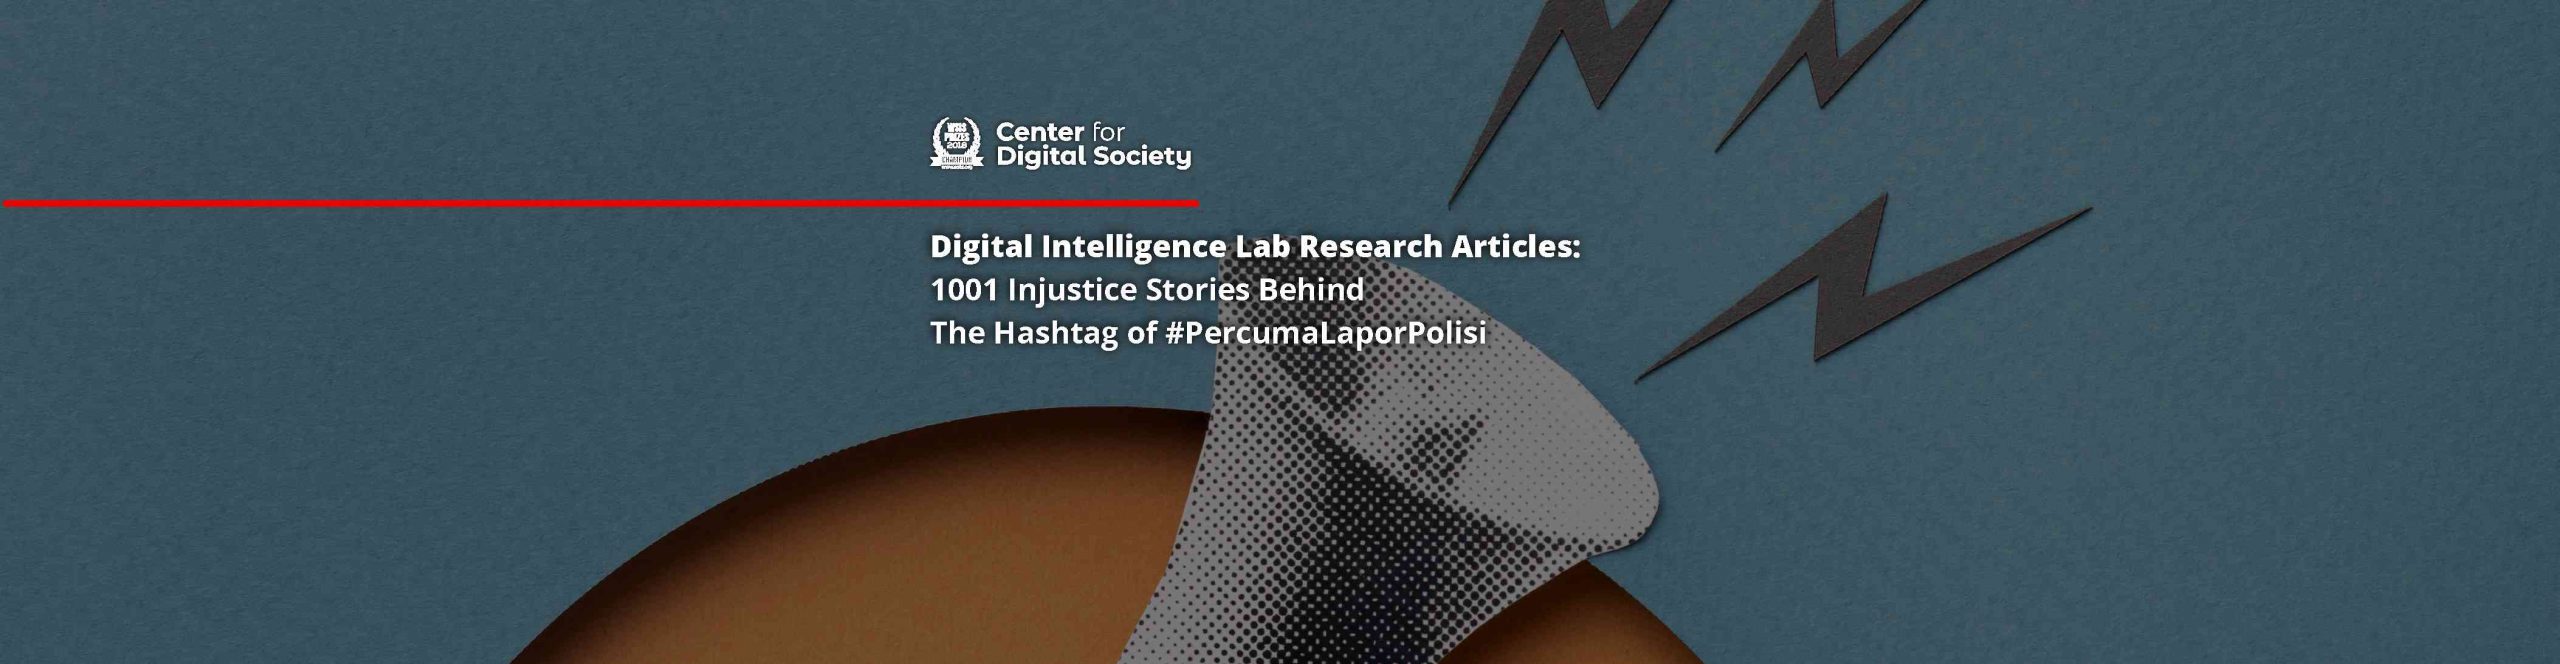 1001 Injustice Stories Behind The Hashtag of #PercumaLaporPolisi